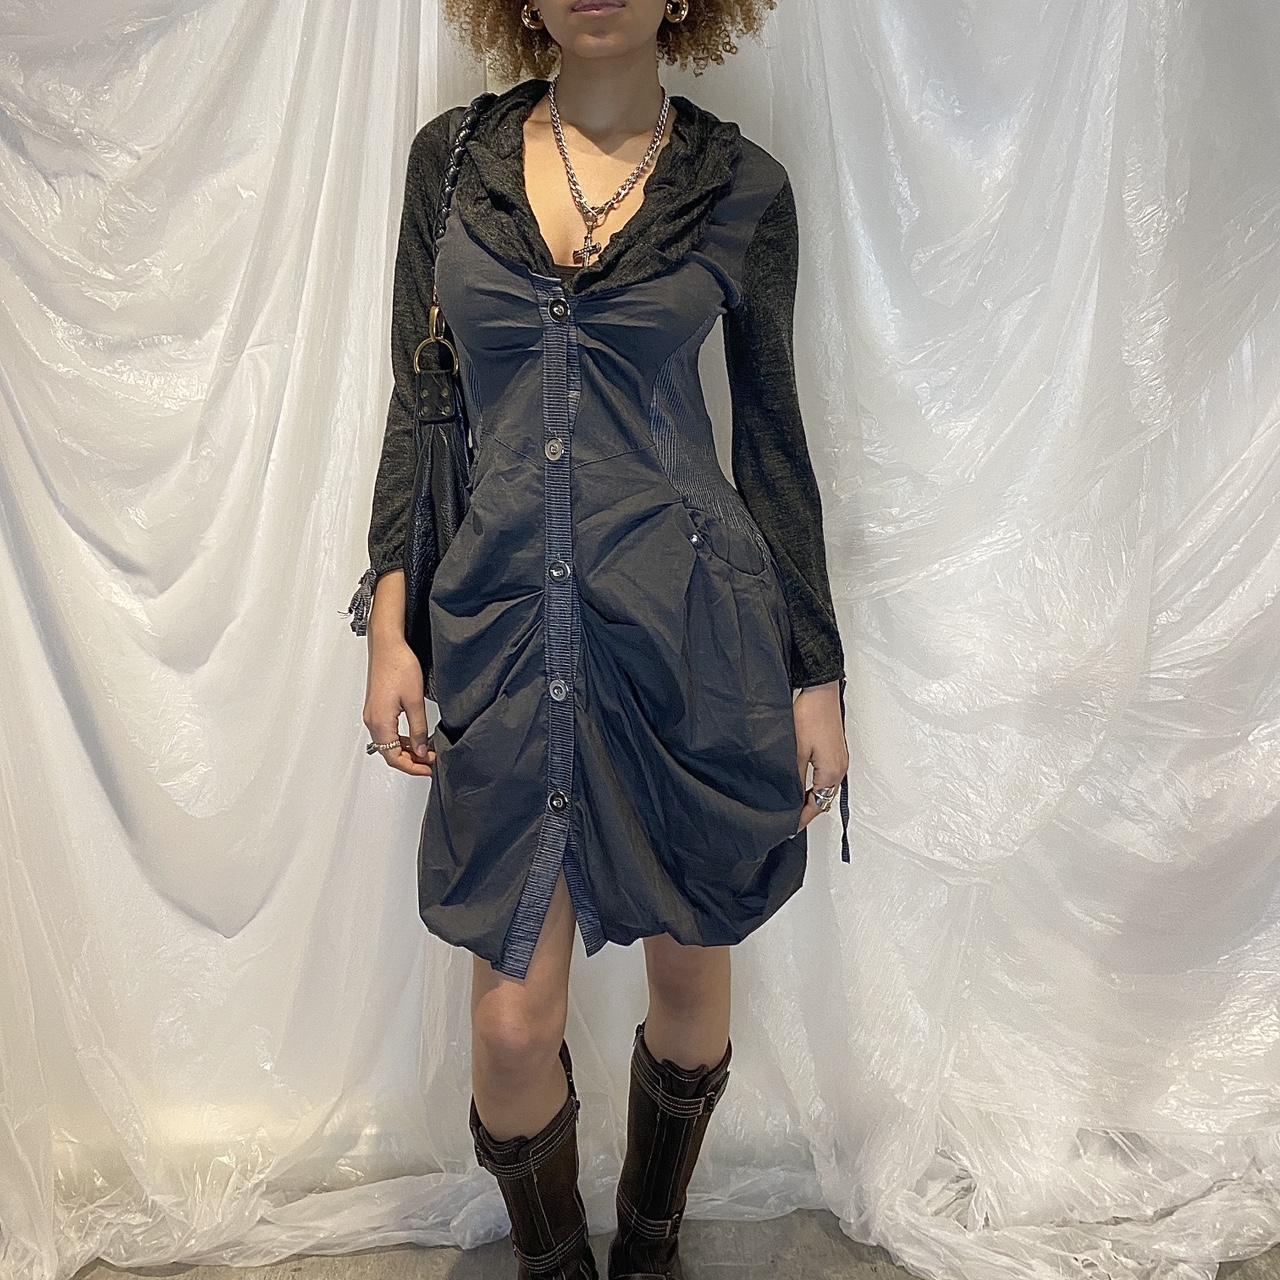 Timeless Wear (@timelesswear_) sources Bella Hadid's iconic Y2K